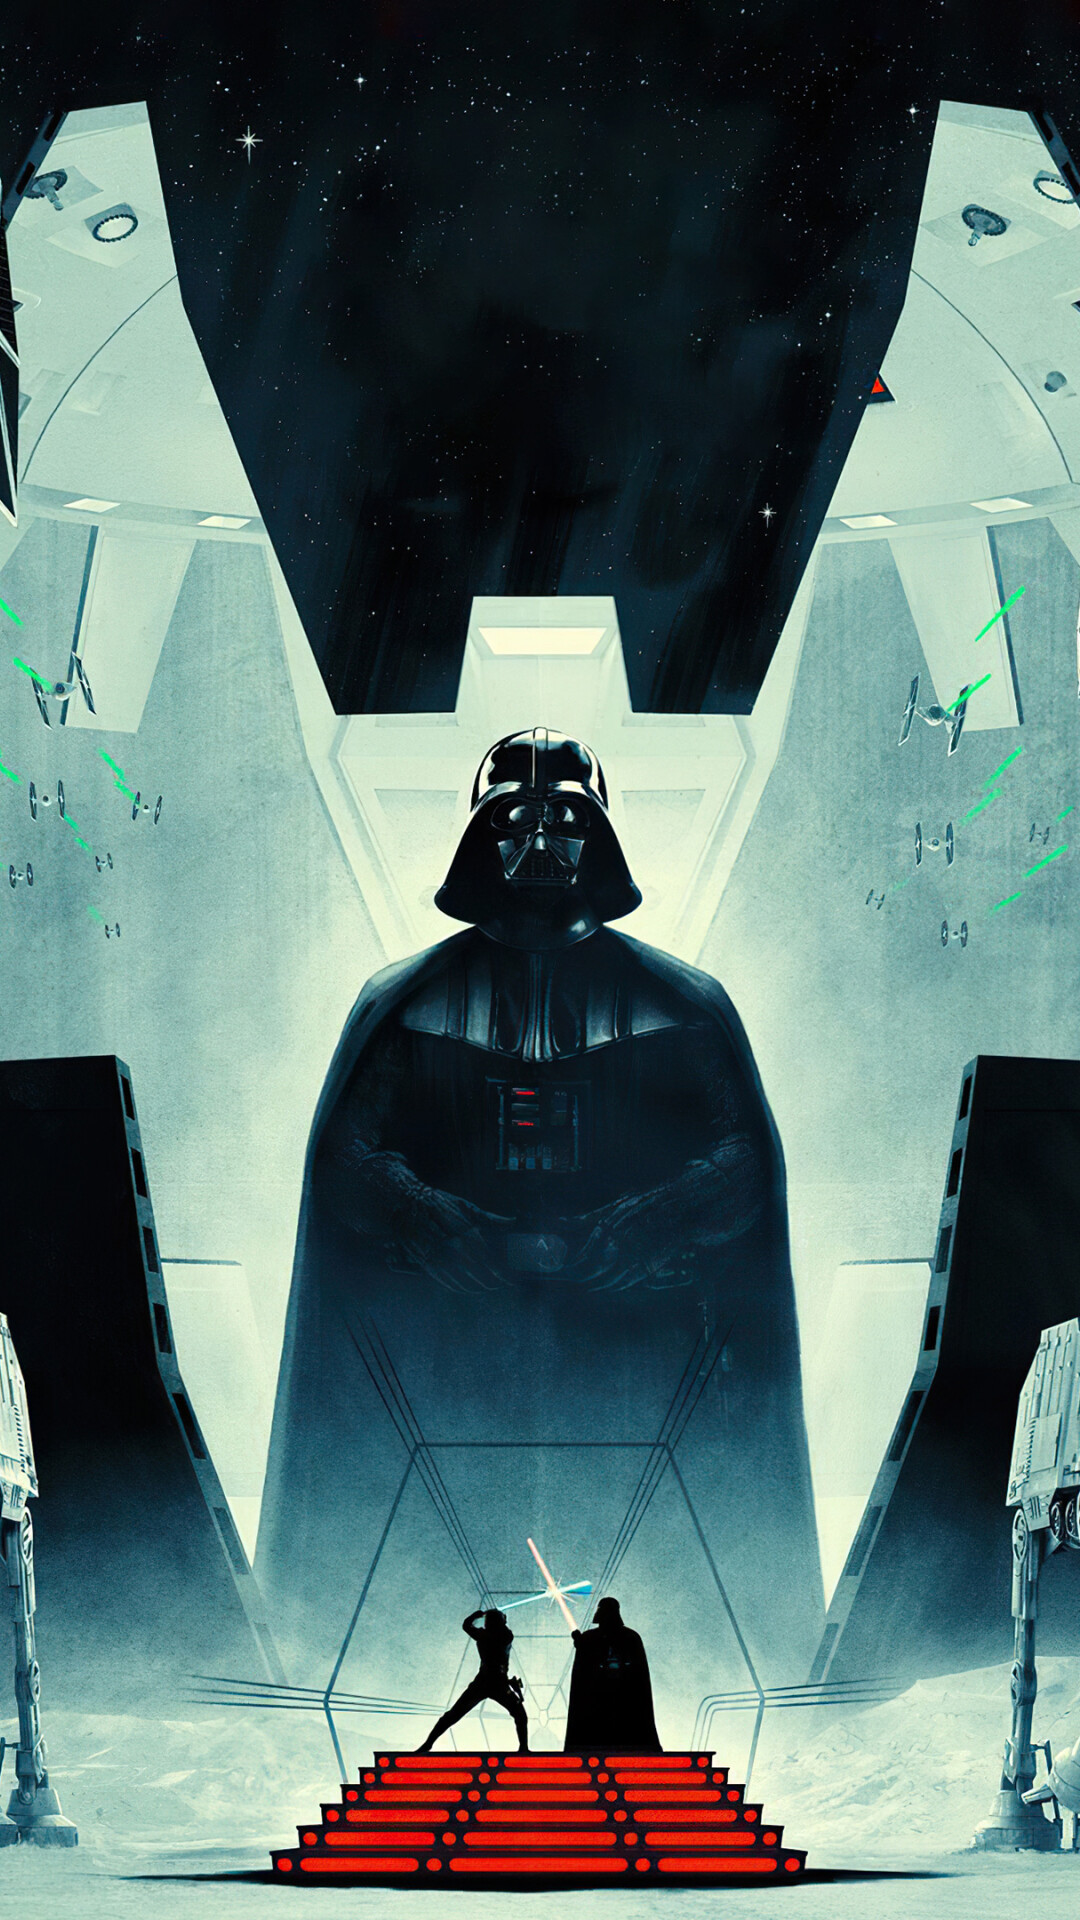 Star Wars: The adventures of Luke Skywalker, Han Solo, Princess, Leia, Darth Vader. 1080x1920 Full HD Wallpaper.